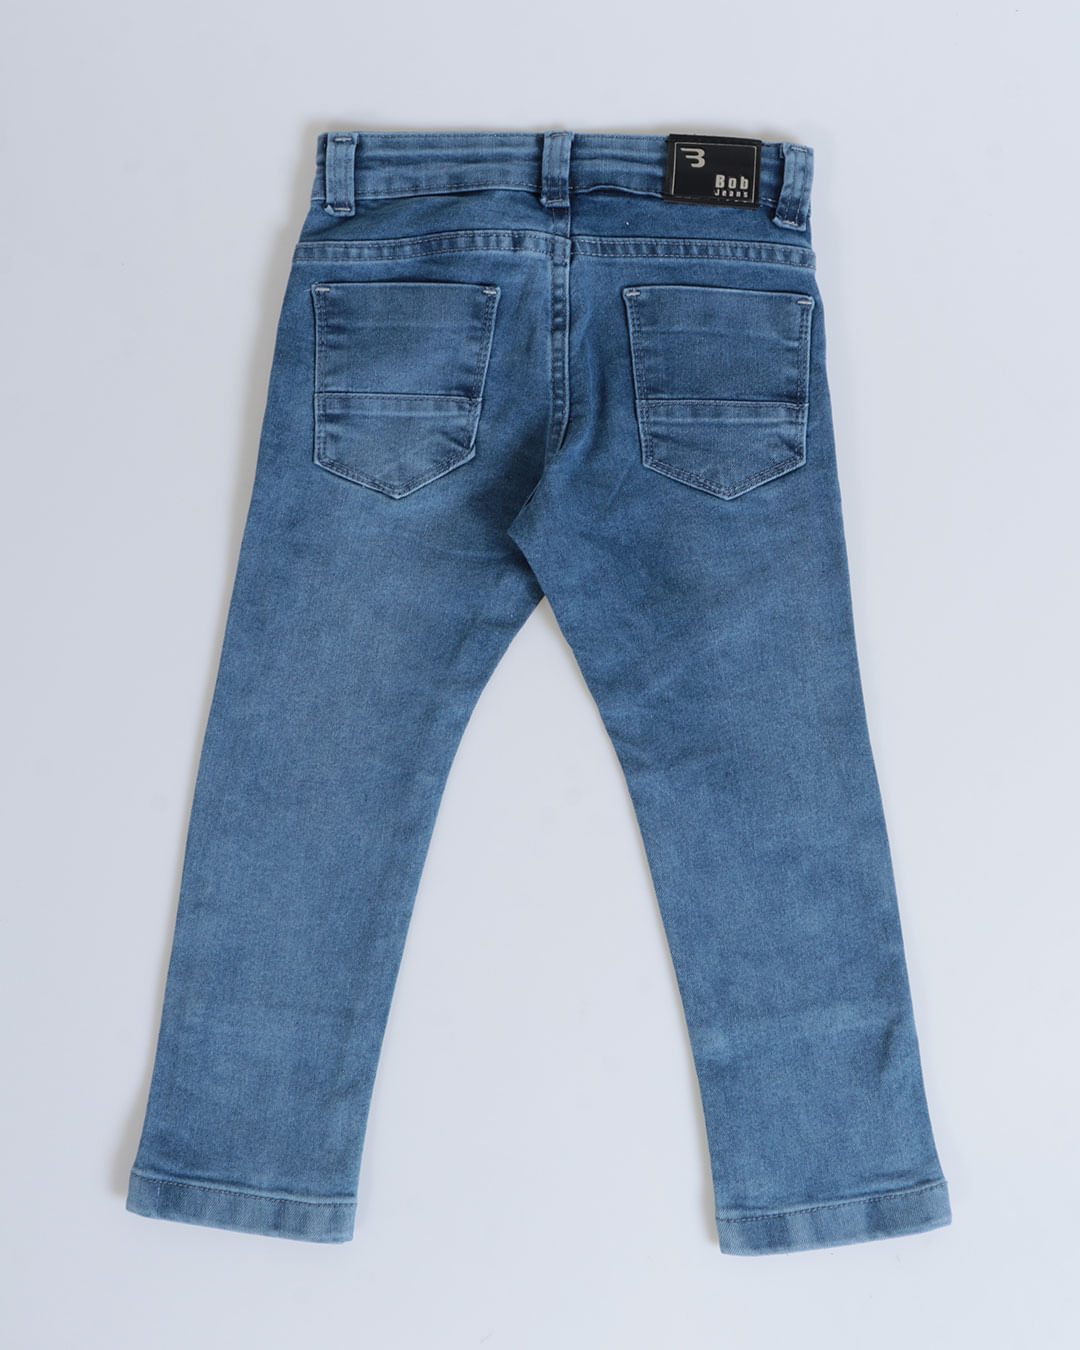 Calca-Jeans-10801-Masc-13-Lc---Blue-Jeans-Medio